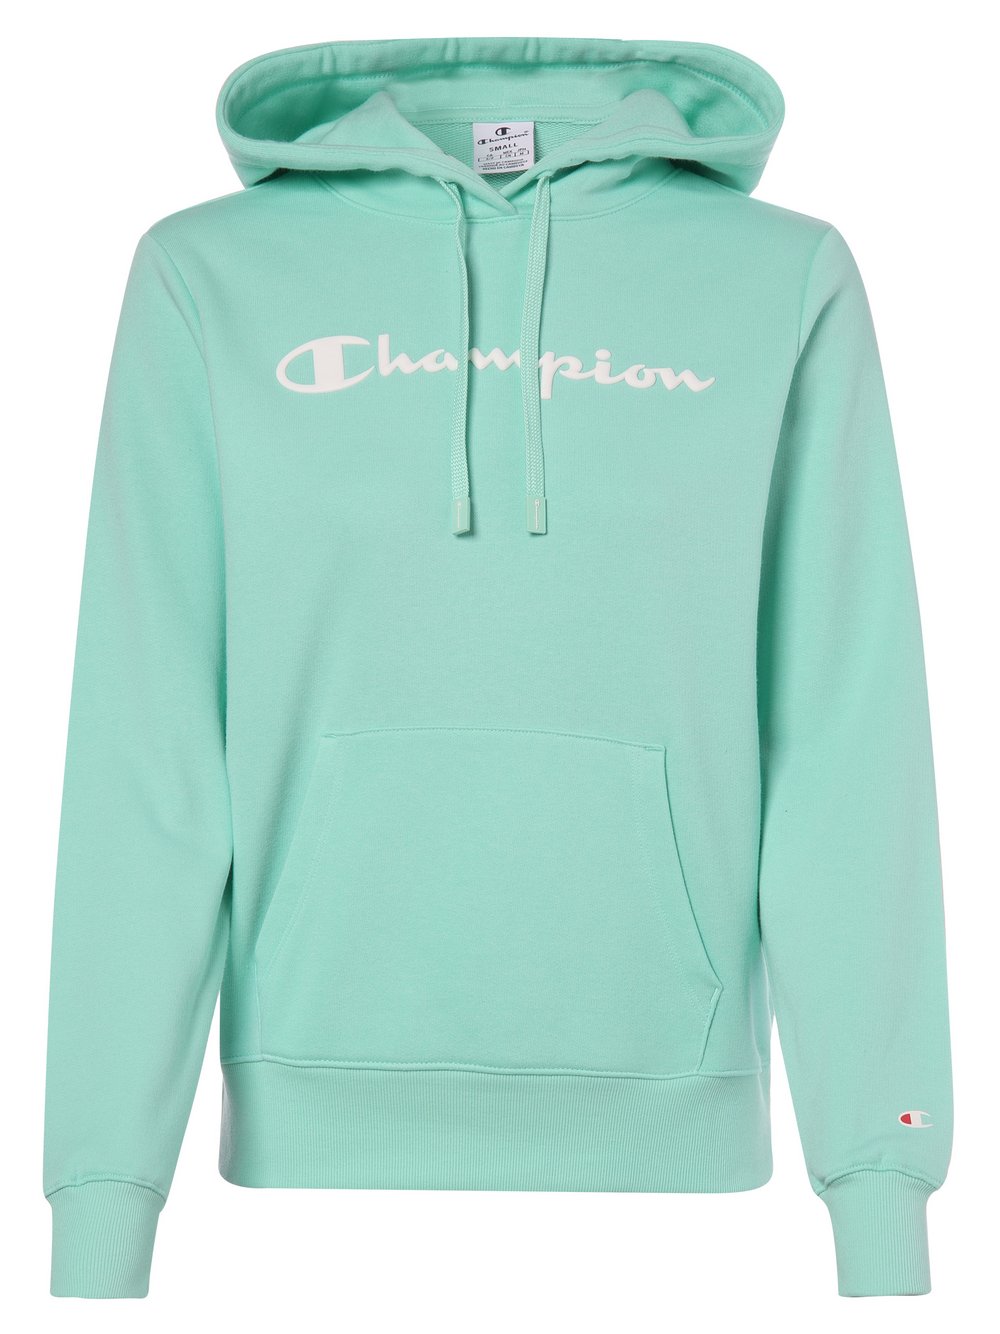 Champion - Damska bluza z kapturem, zielony